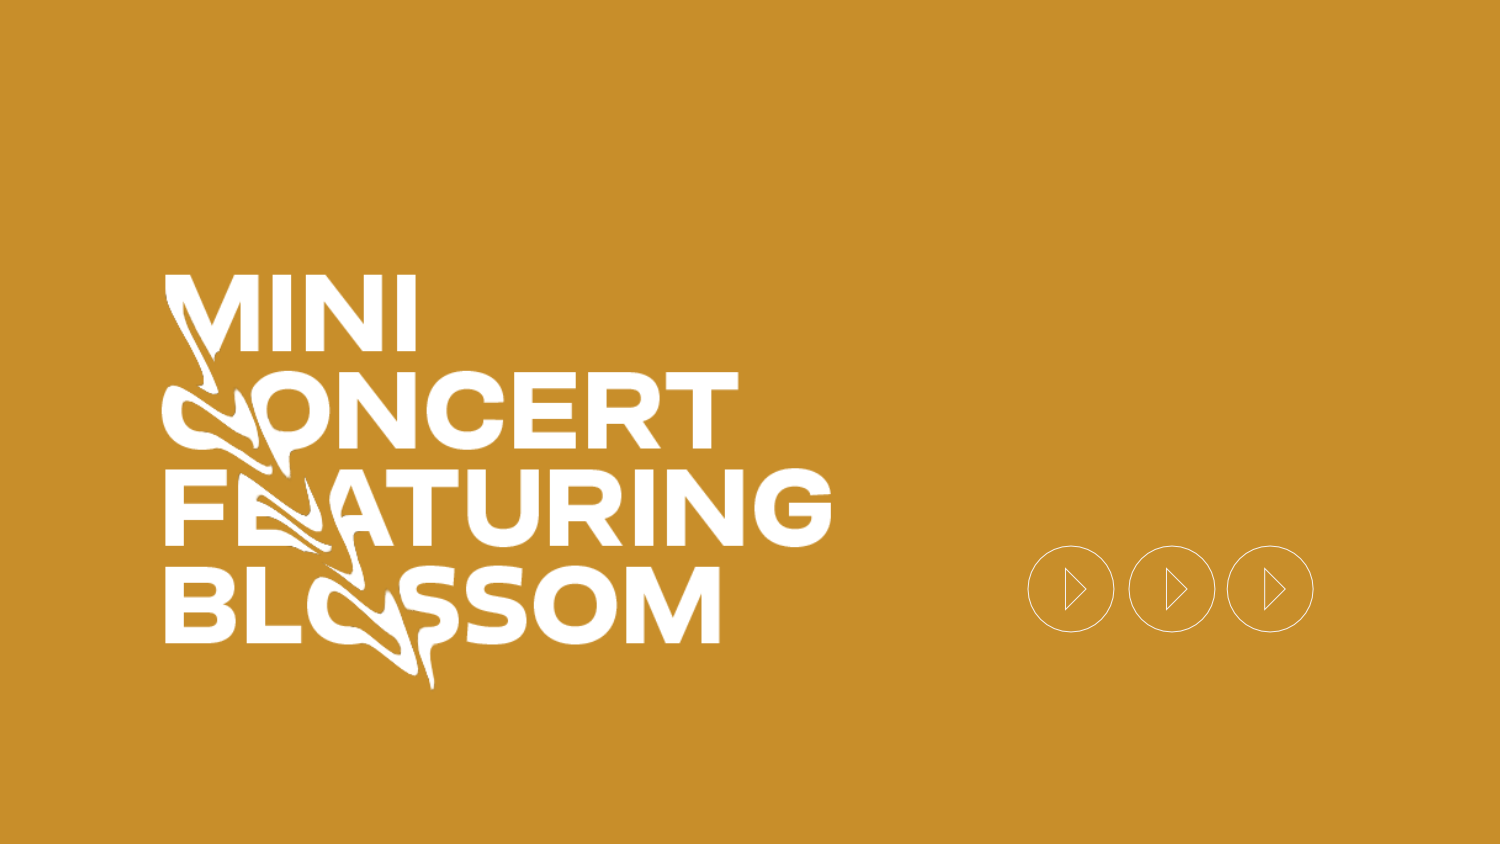 Marmoset Presents a Mini Concert With Blossom 